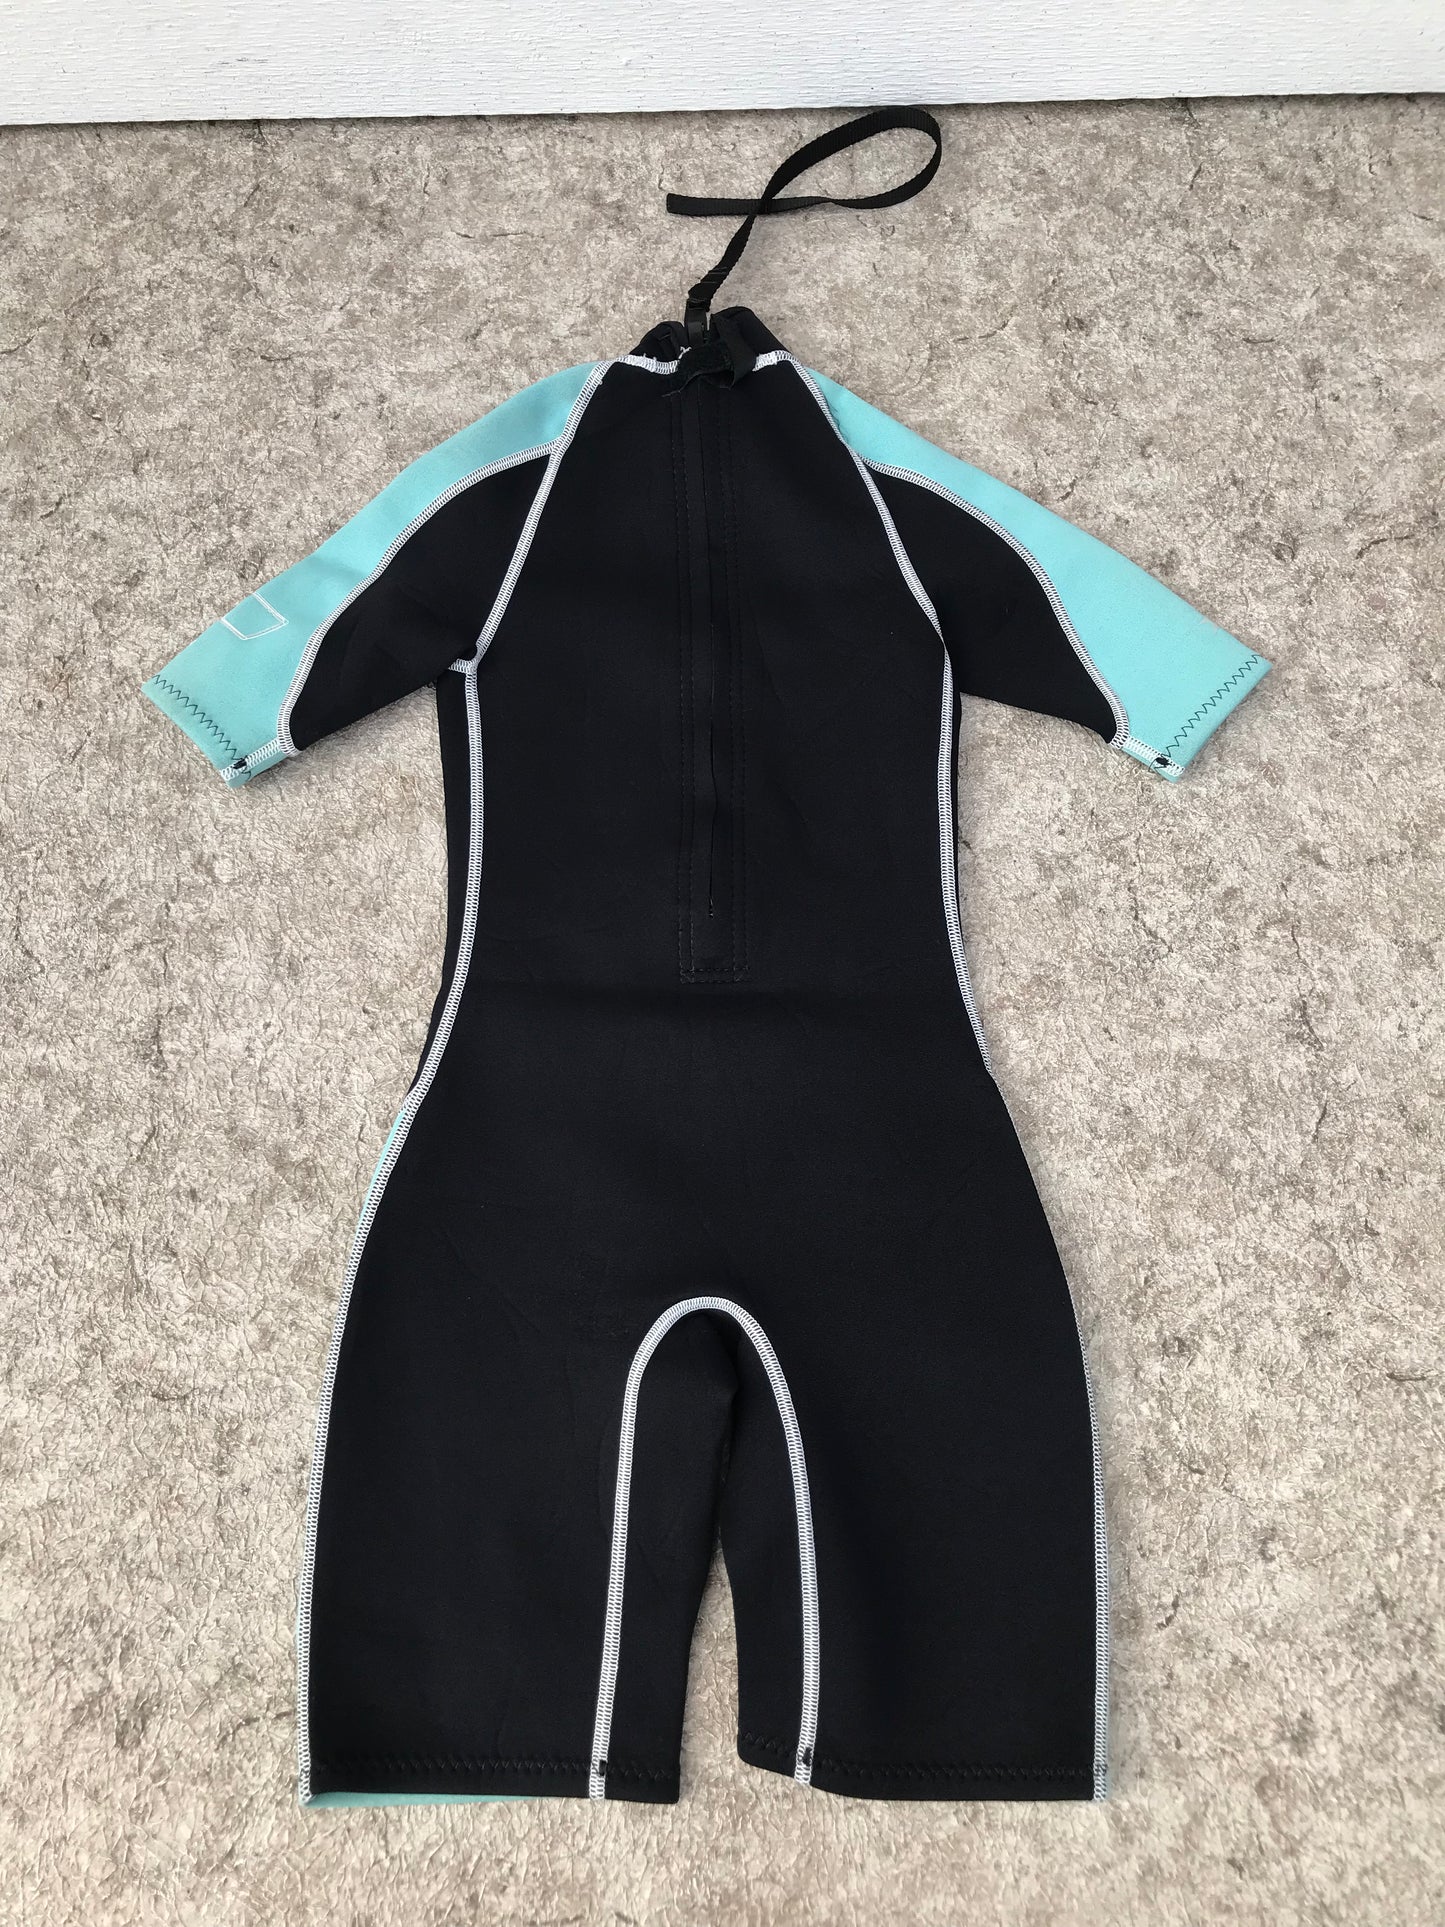 Wetsuit Child Size 10 Black Aqua  2-3 mm Neoprene Excellent